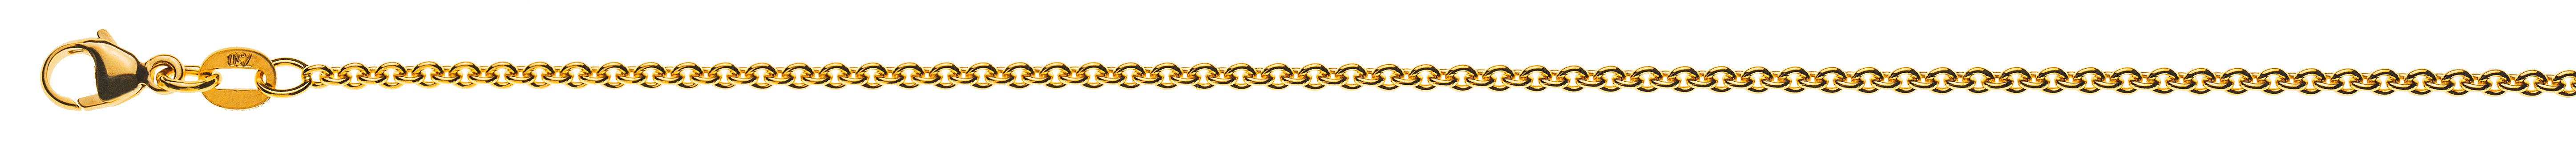 AURONOS Prestige Necklace Yellow Gold 18K Round Anchor 38cm 1.9mm